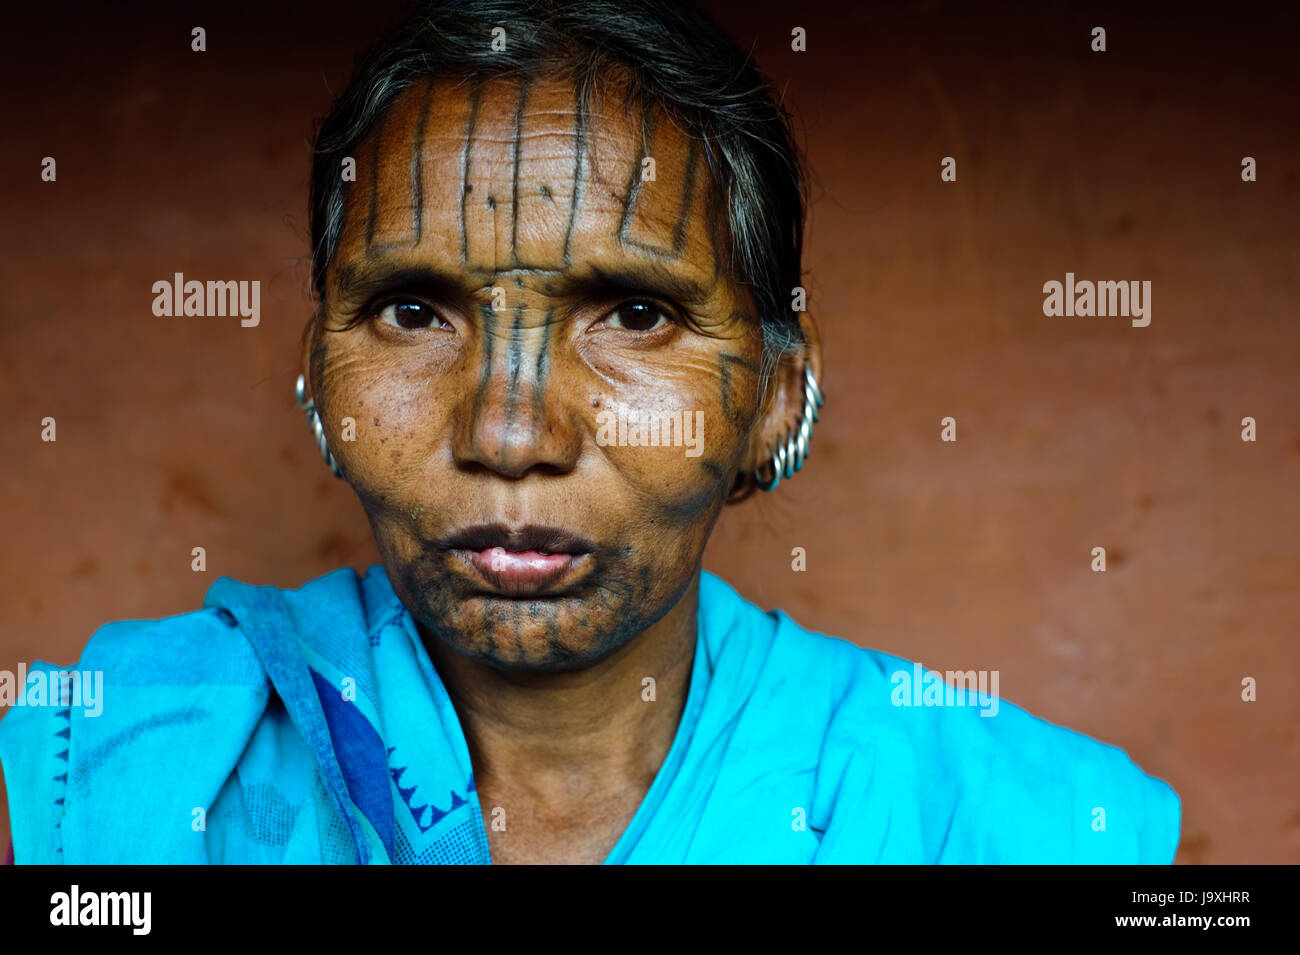 Woman from the Kutia Kondh tribe ( India) Stock Photo